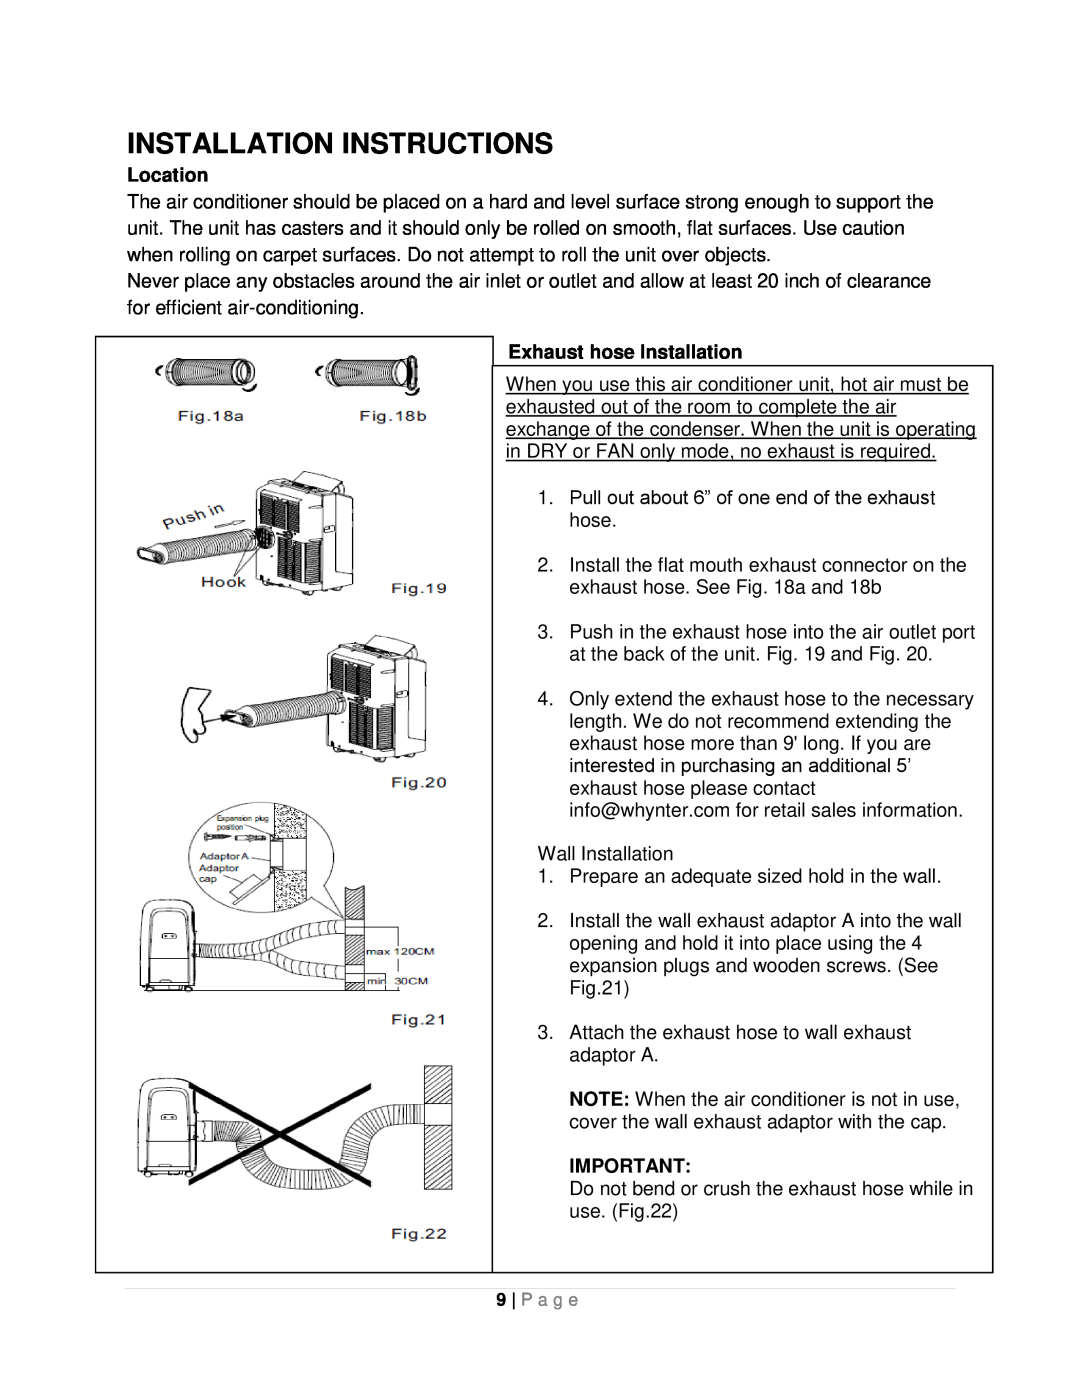 Whynter ARC-10WB instruction manual Installation Instructions, Location, Exhaust hose Installation 